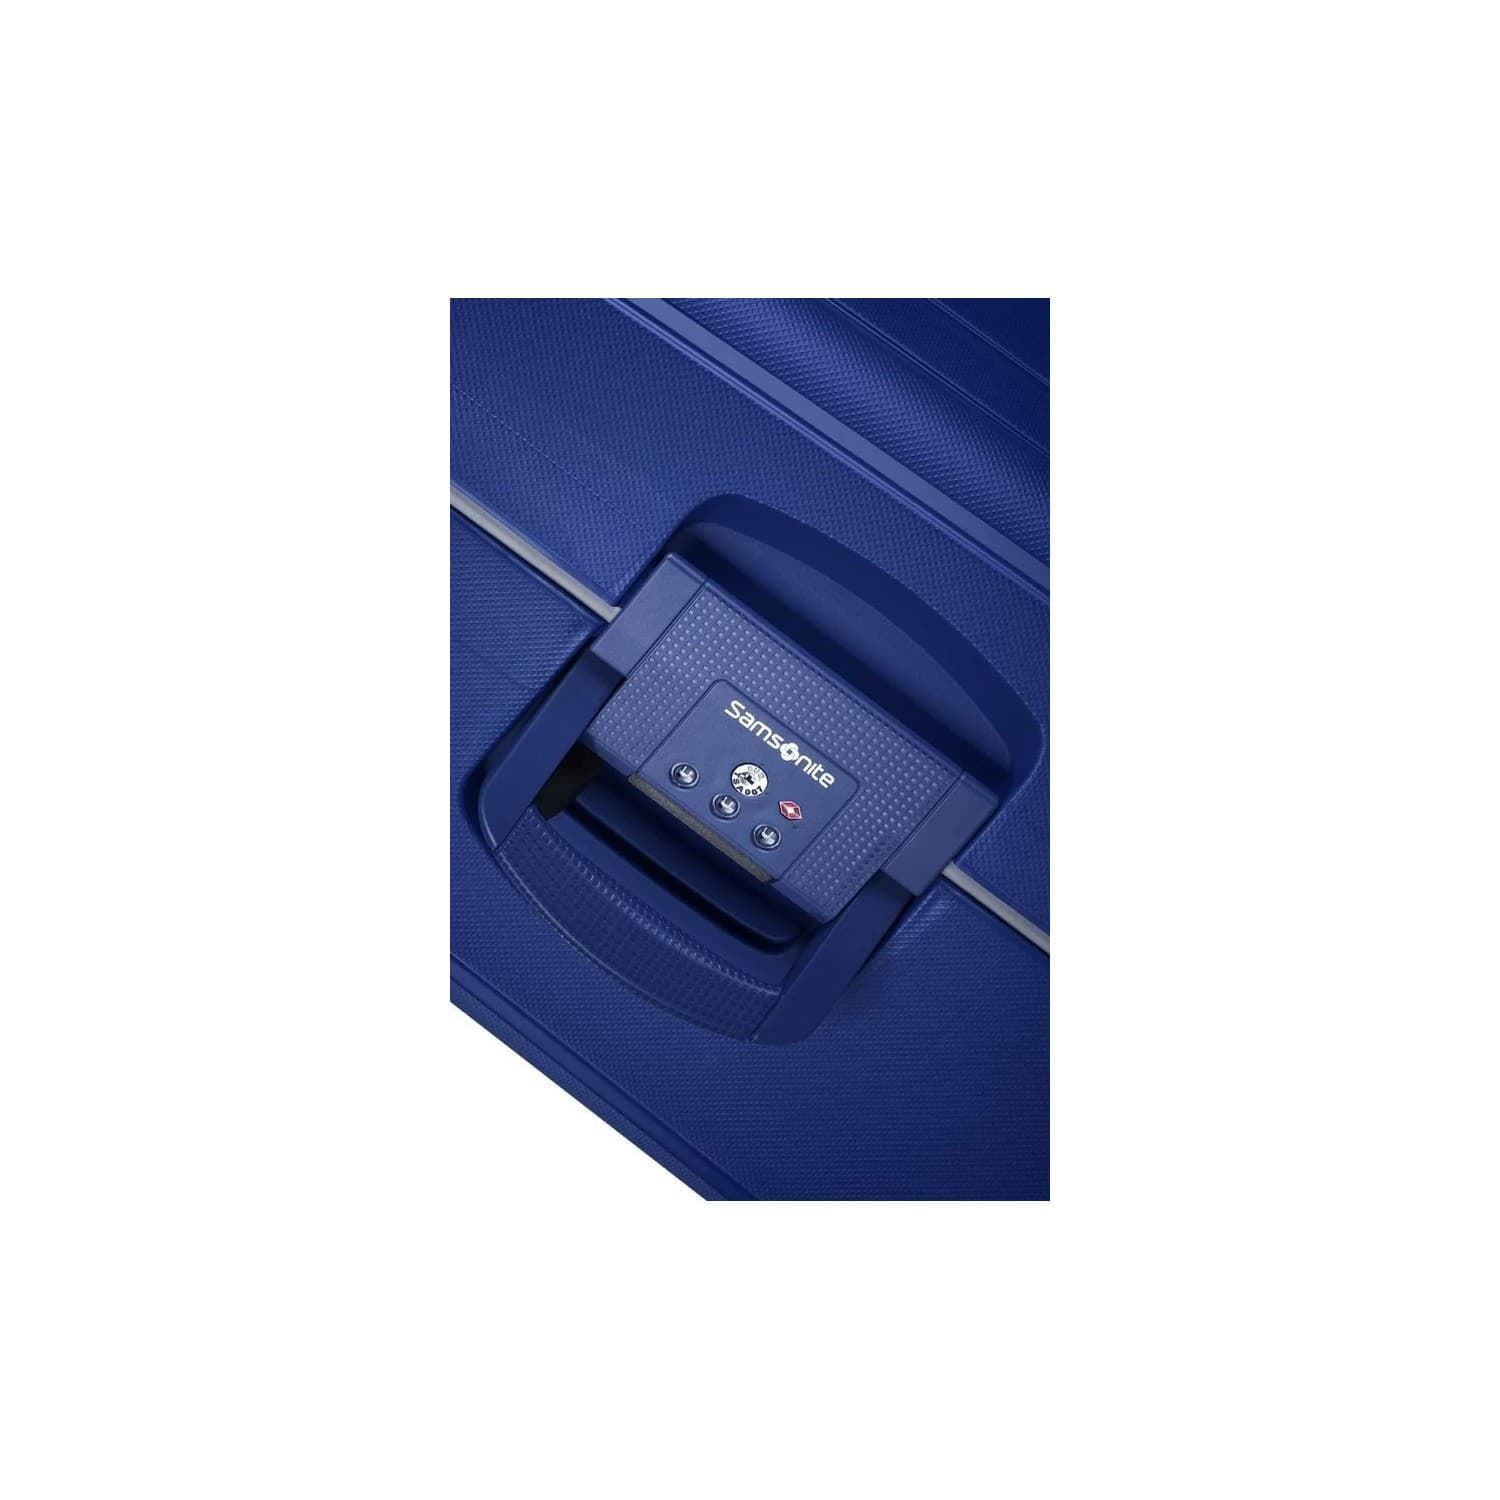 Samsonite S'Cure Maleta Mediana 69 cms Resistente Ligera Color Azul Marino - Imagen 5